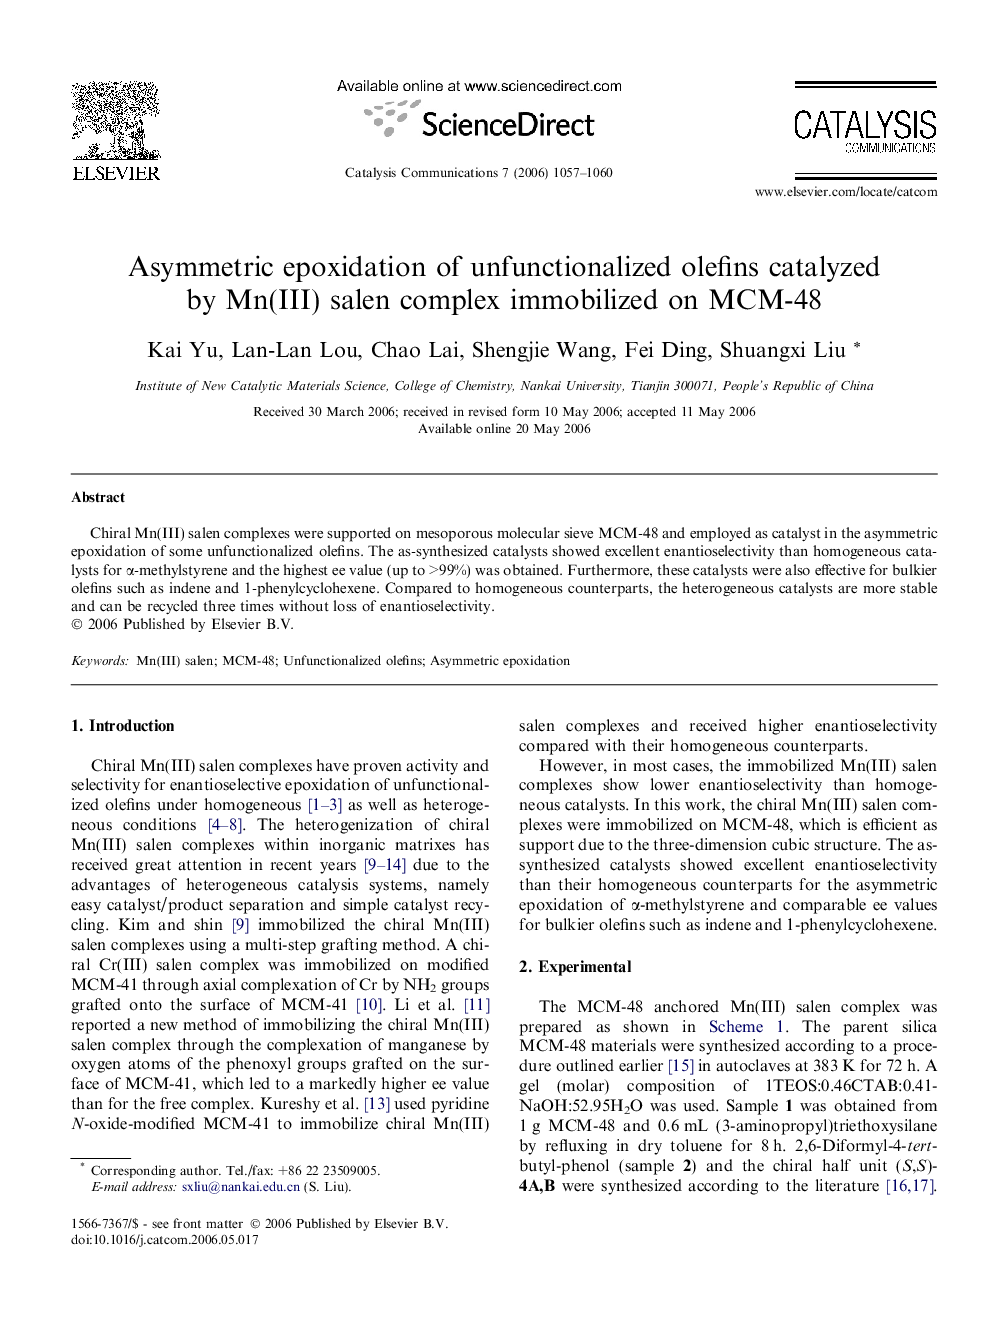 Asymmetric epoxidation of unfunctionalized olefins catalyzed by Mn(III) salen complex immobilized on MCM-48